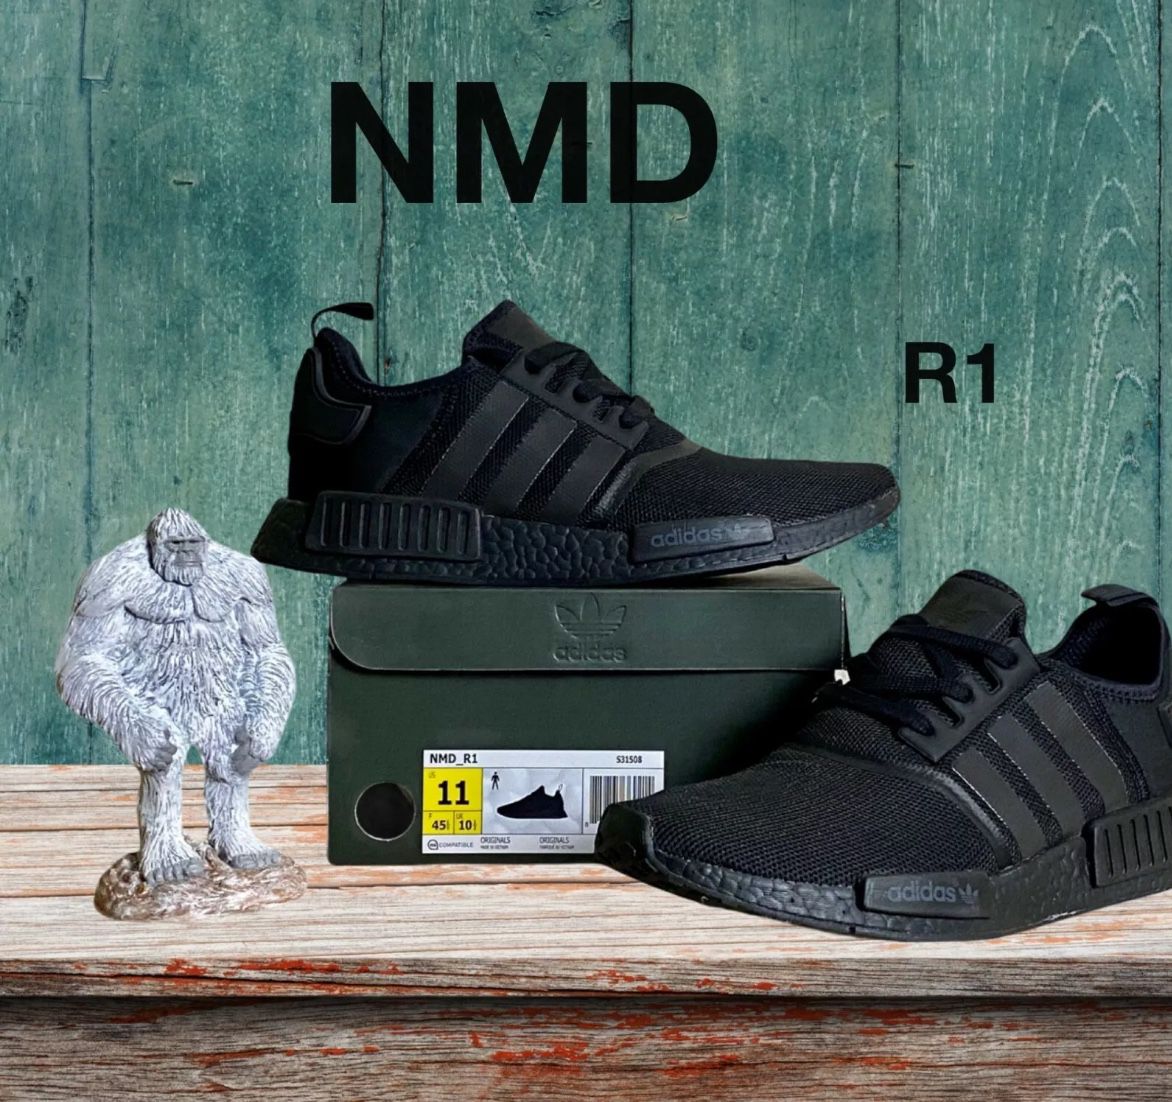 Adidas NMD R1 Black Sneakers 